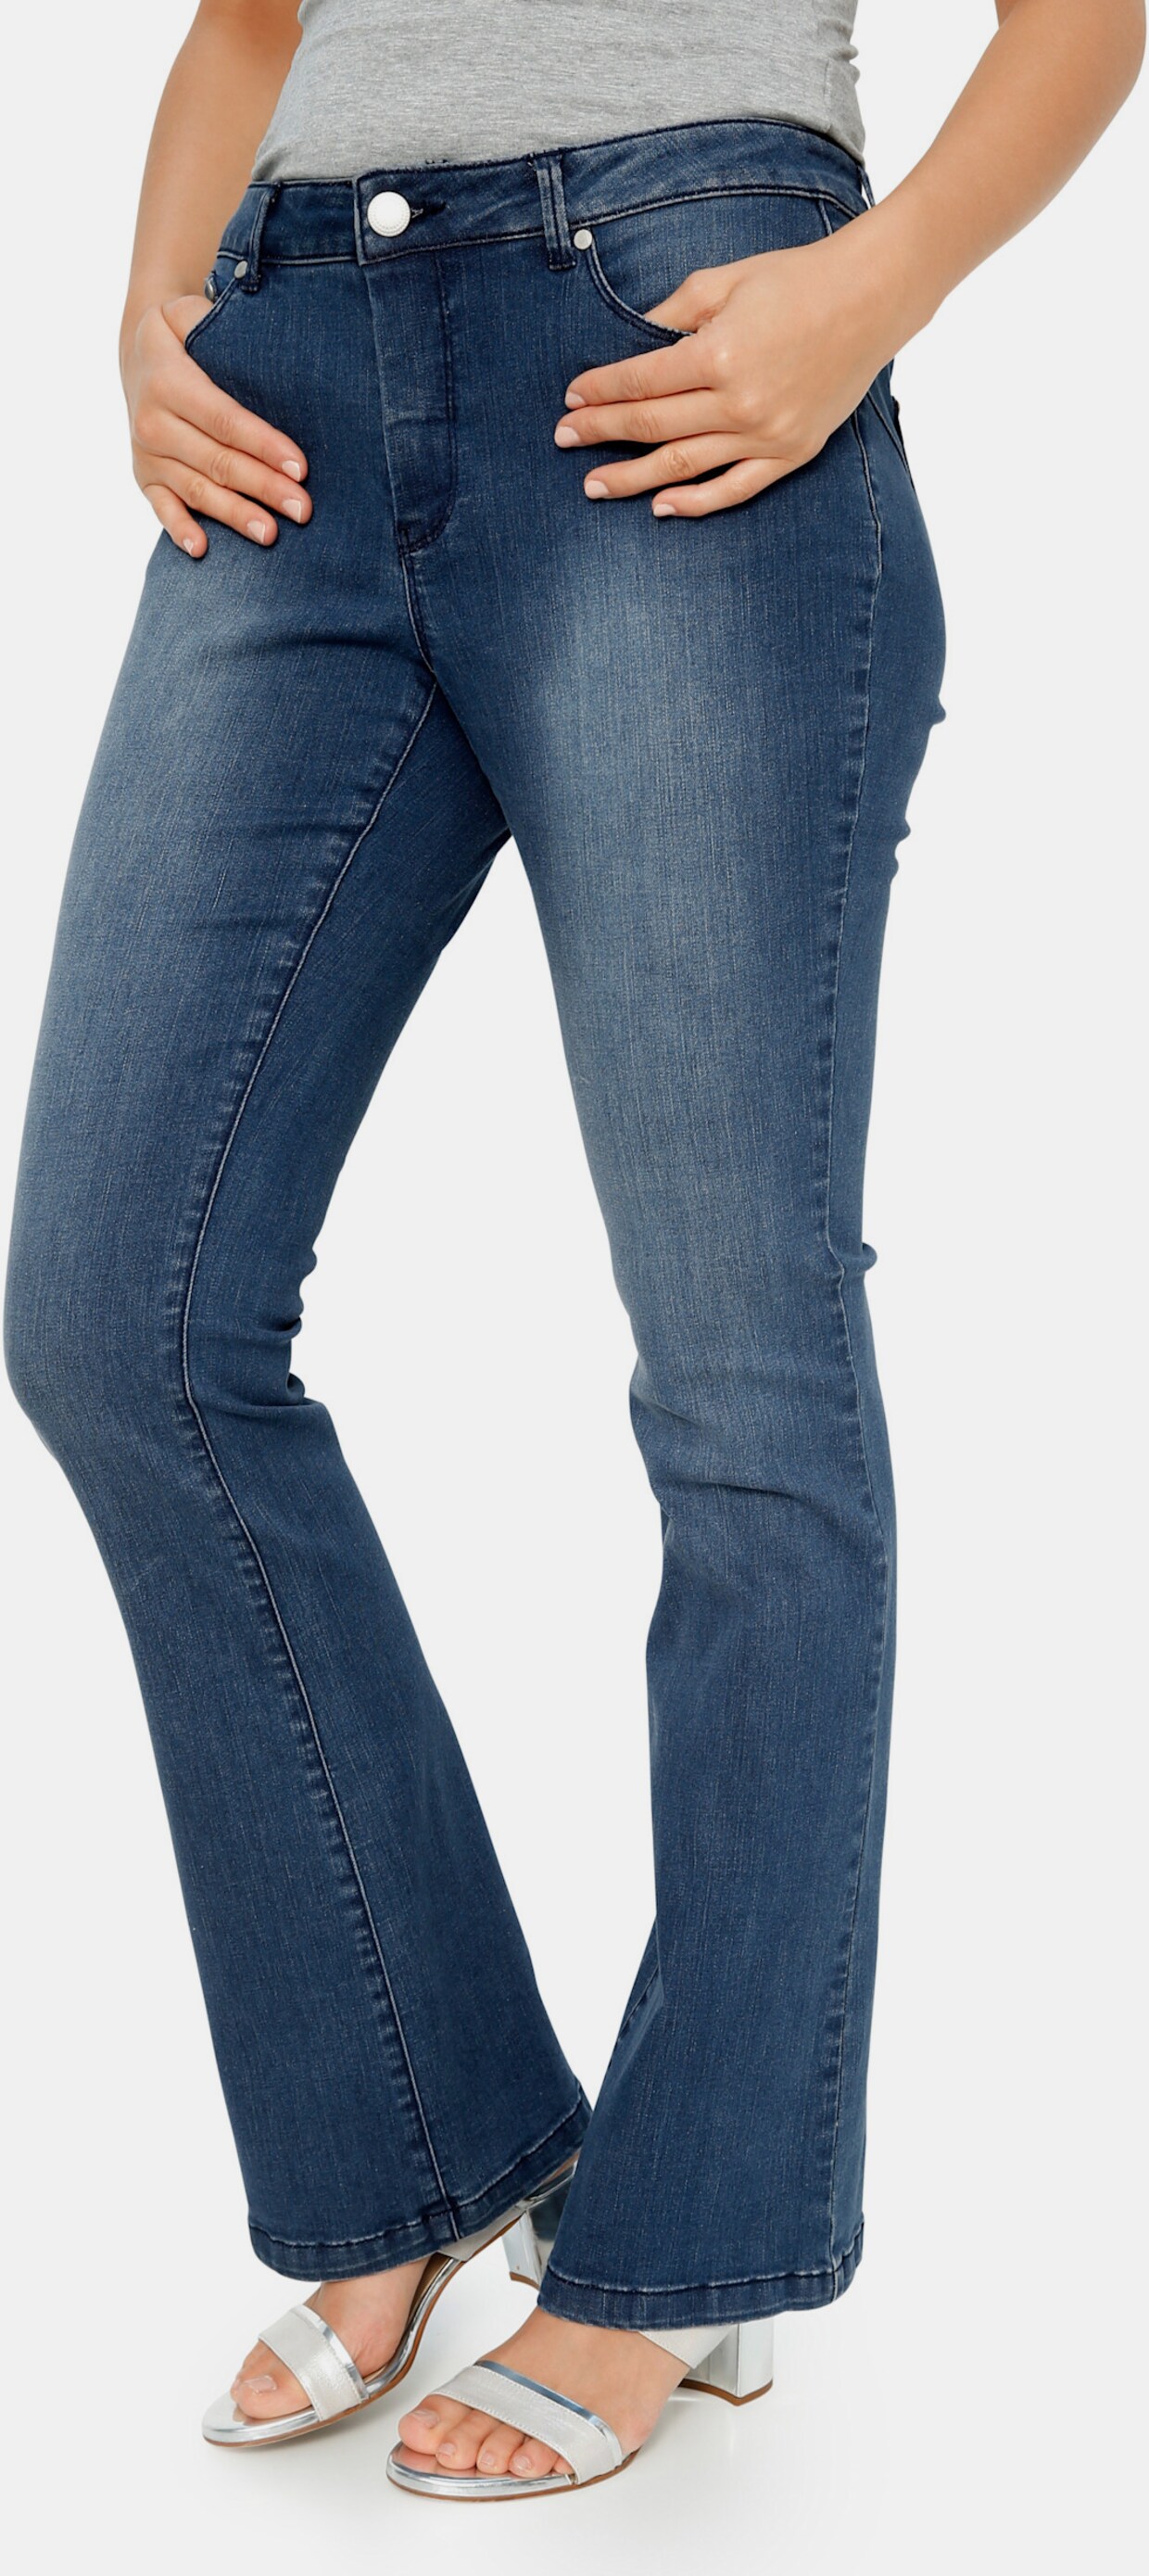 heine jeans effet ventre plat - bleu denim